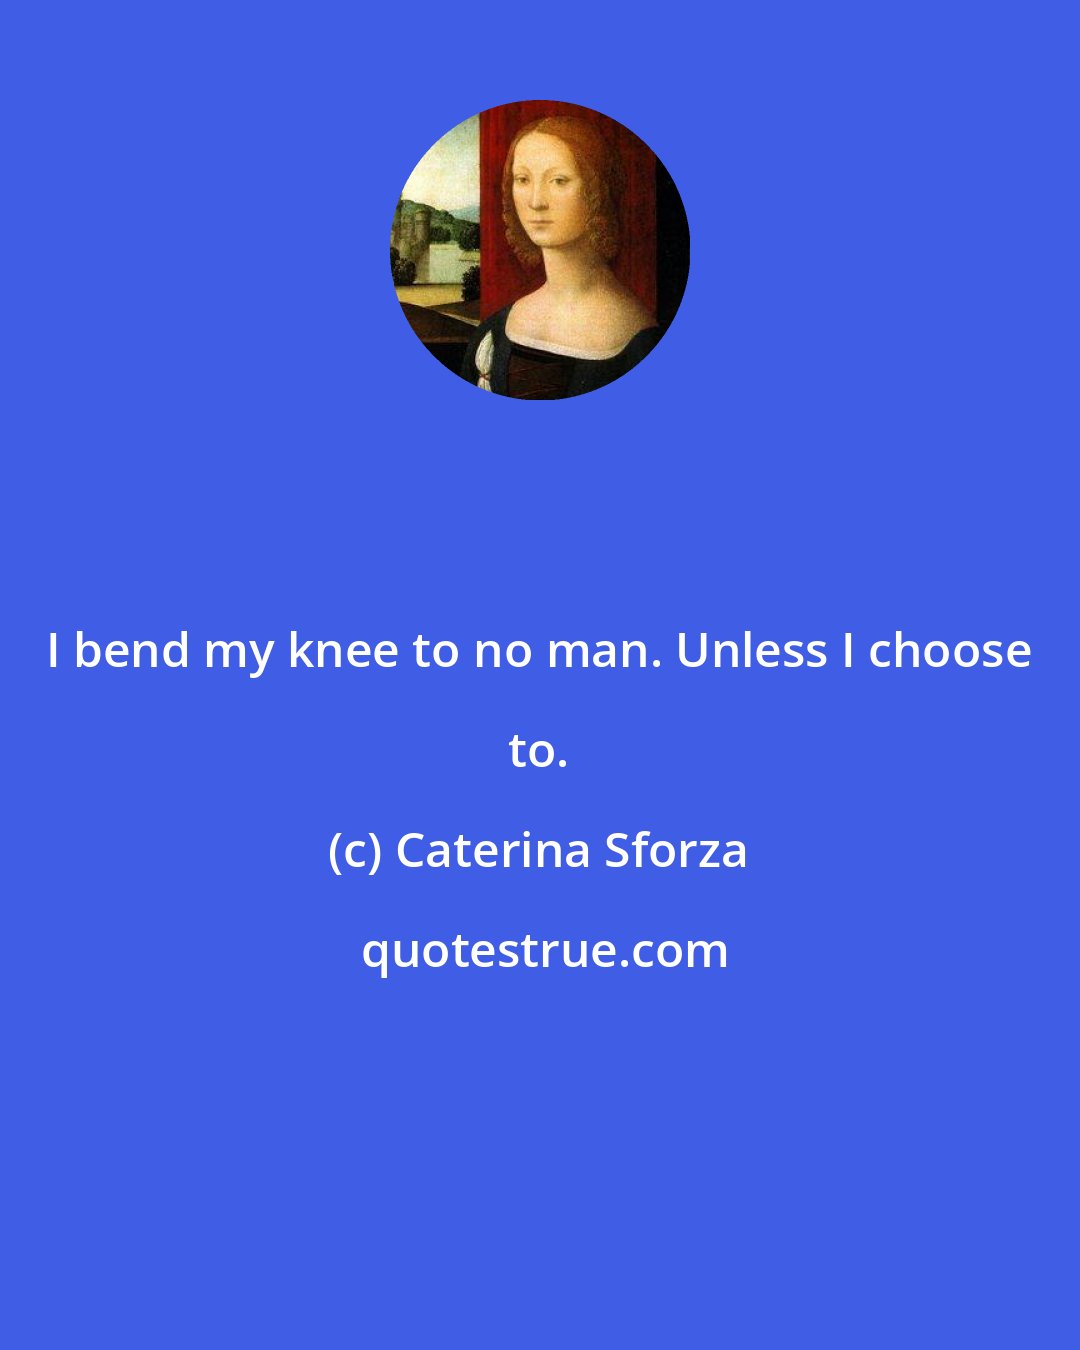 Caterina Sforza: I bend my knee to no man. Unless I choose to.